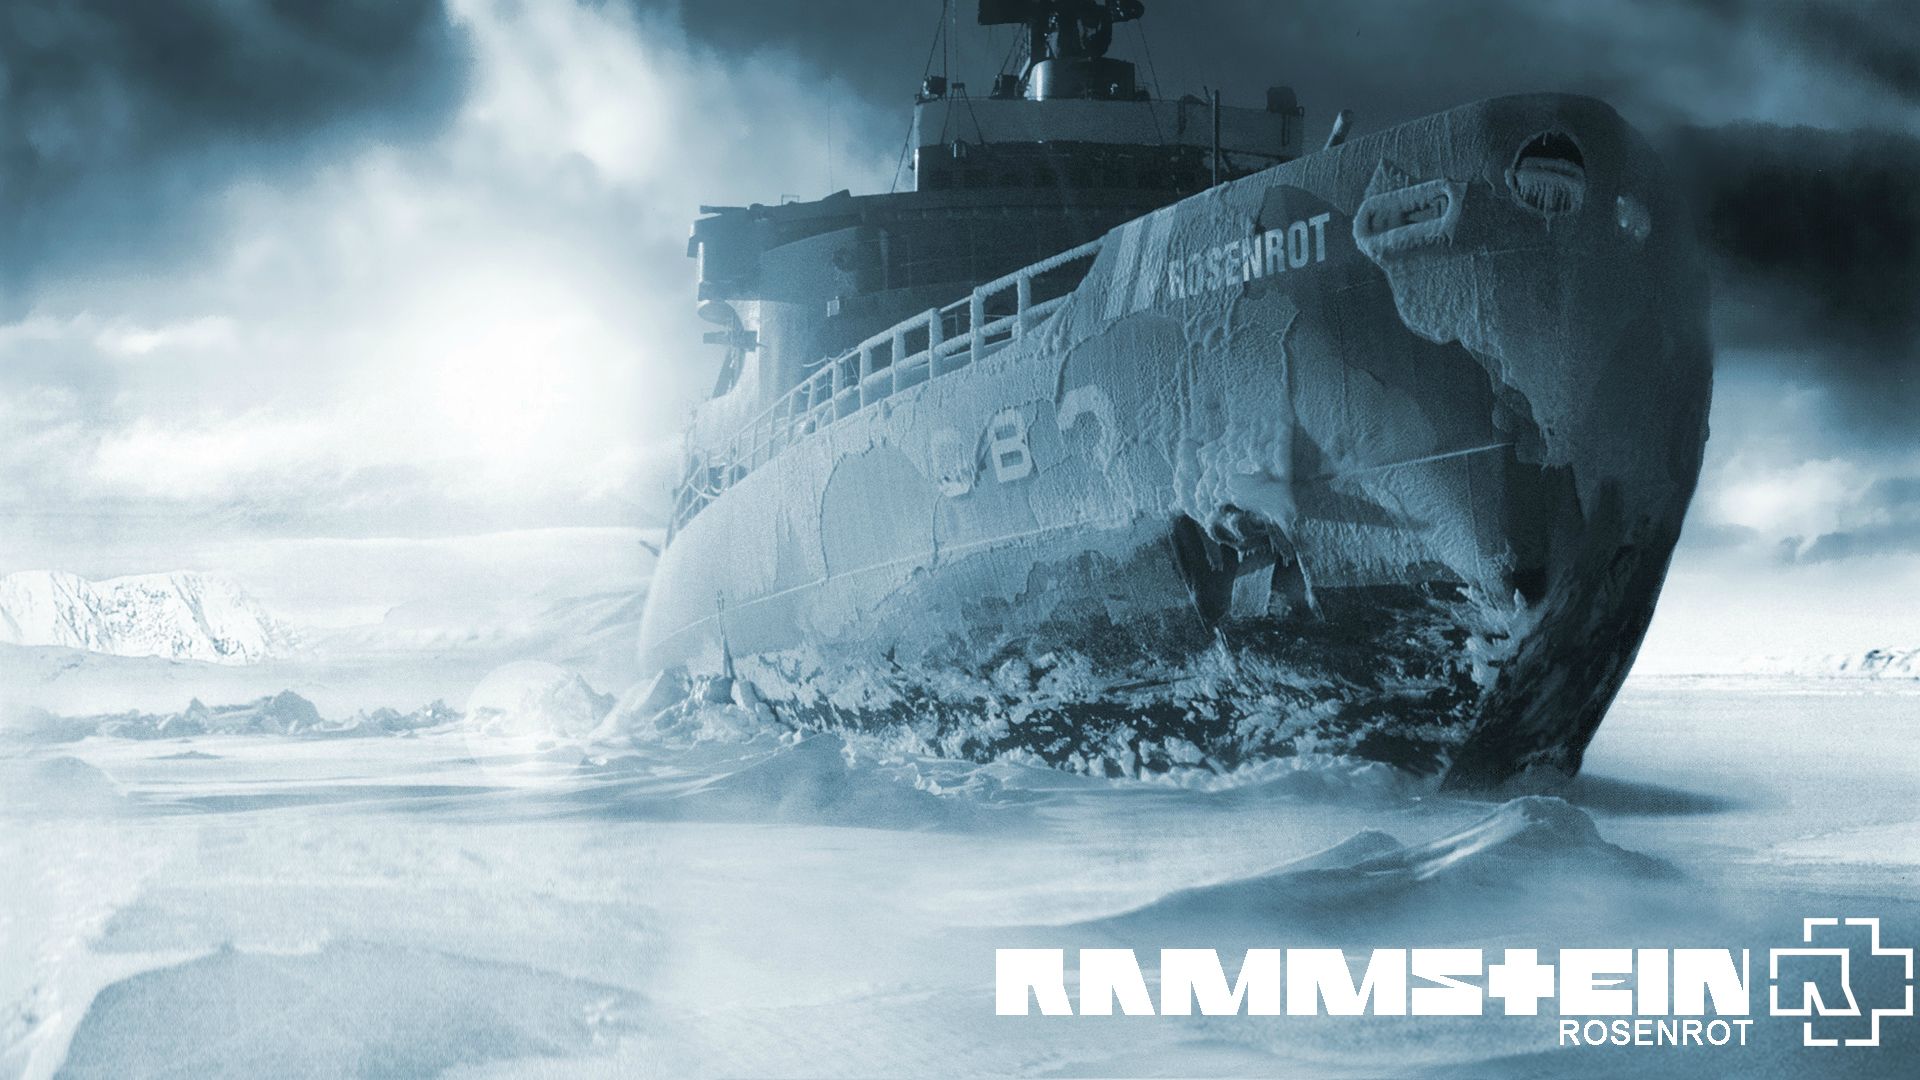 rammstein, germany, music, album, ice, ship, shipwreck